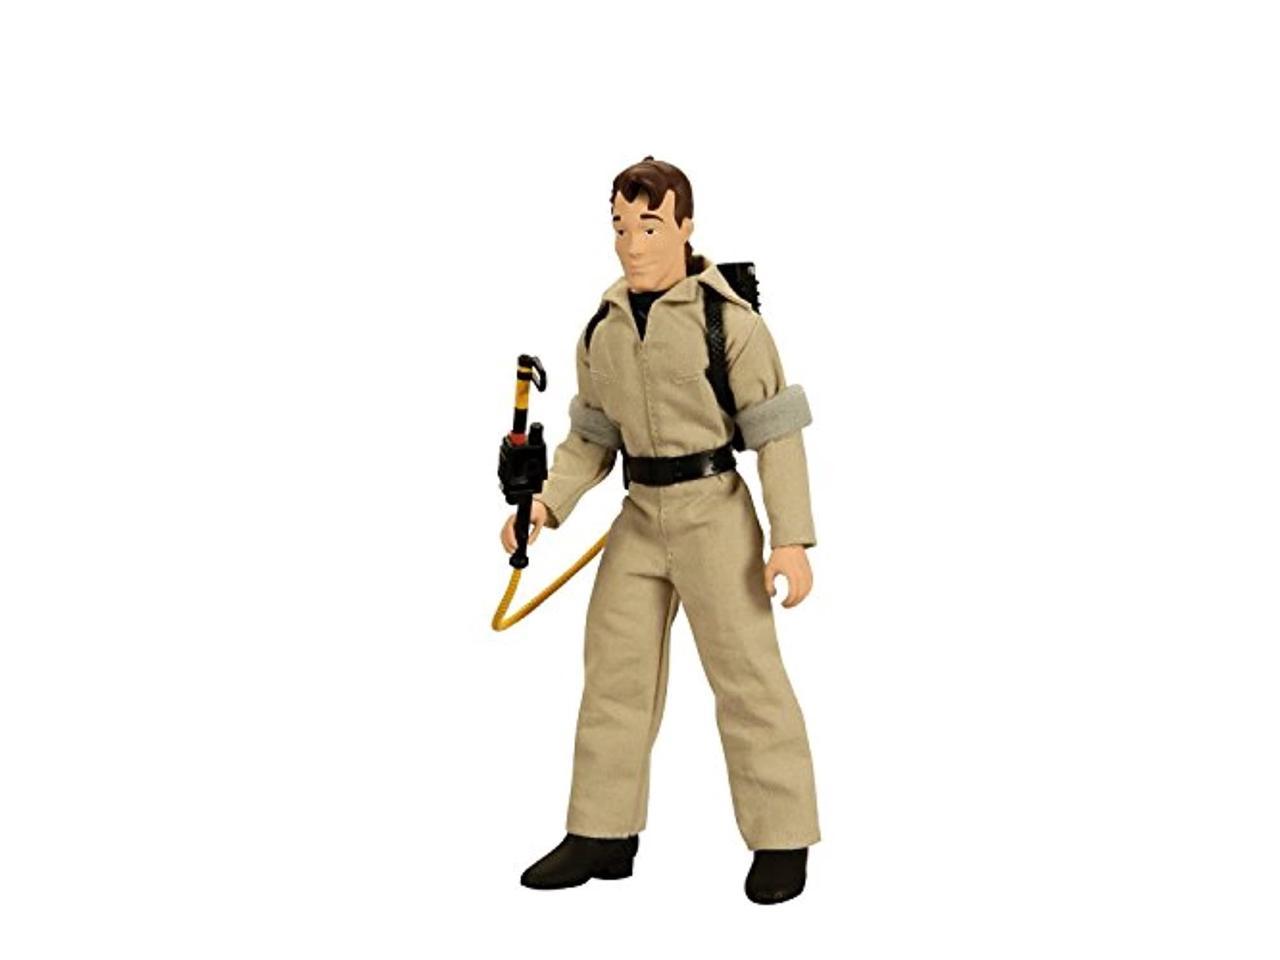 2010 Mattel Ghostbusters Peter Venkman Action Figure Carded for sale online